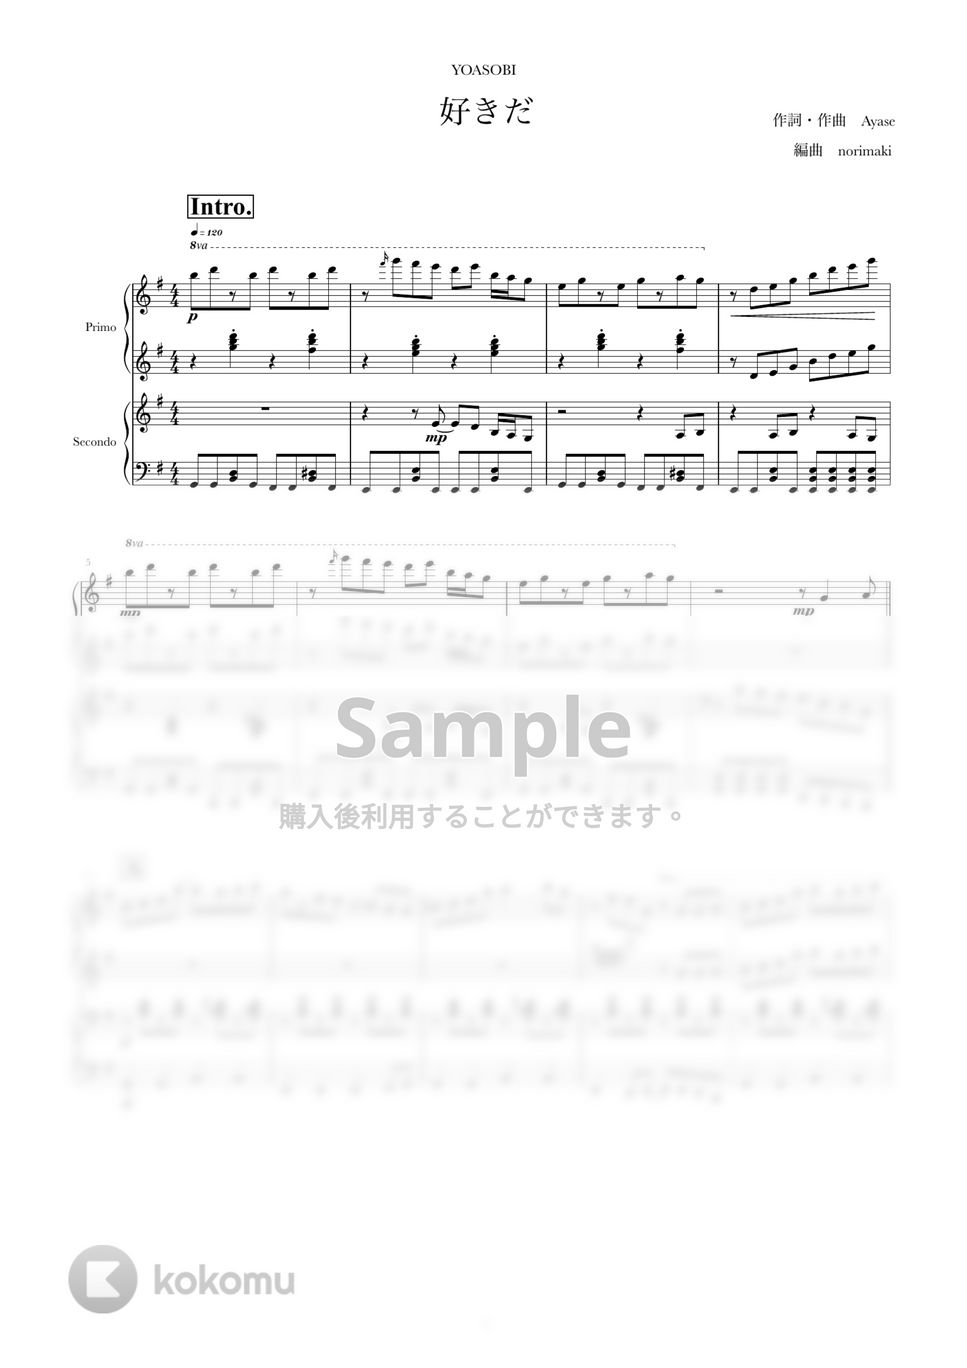 YOASOBI - 好きだ (ピアノ連弾) by norimaki